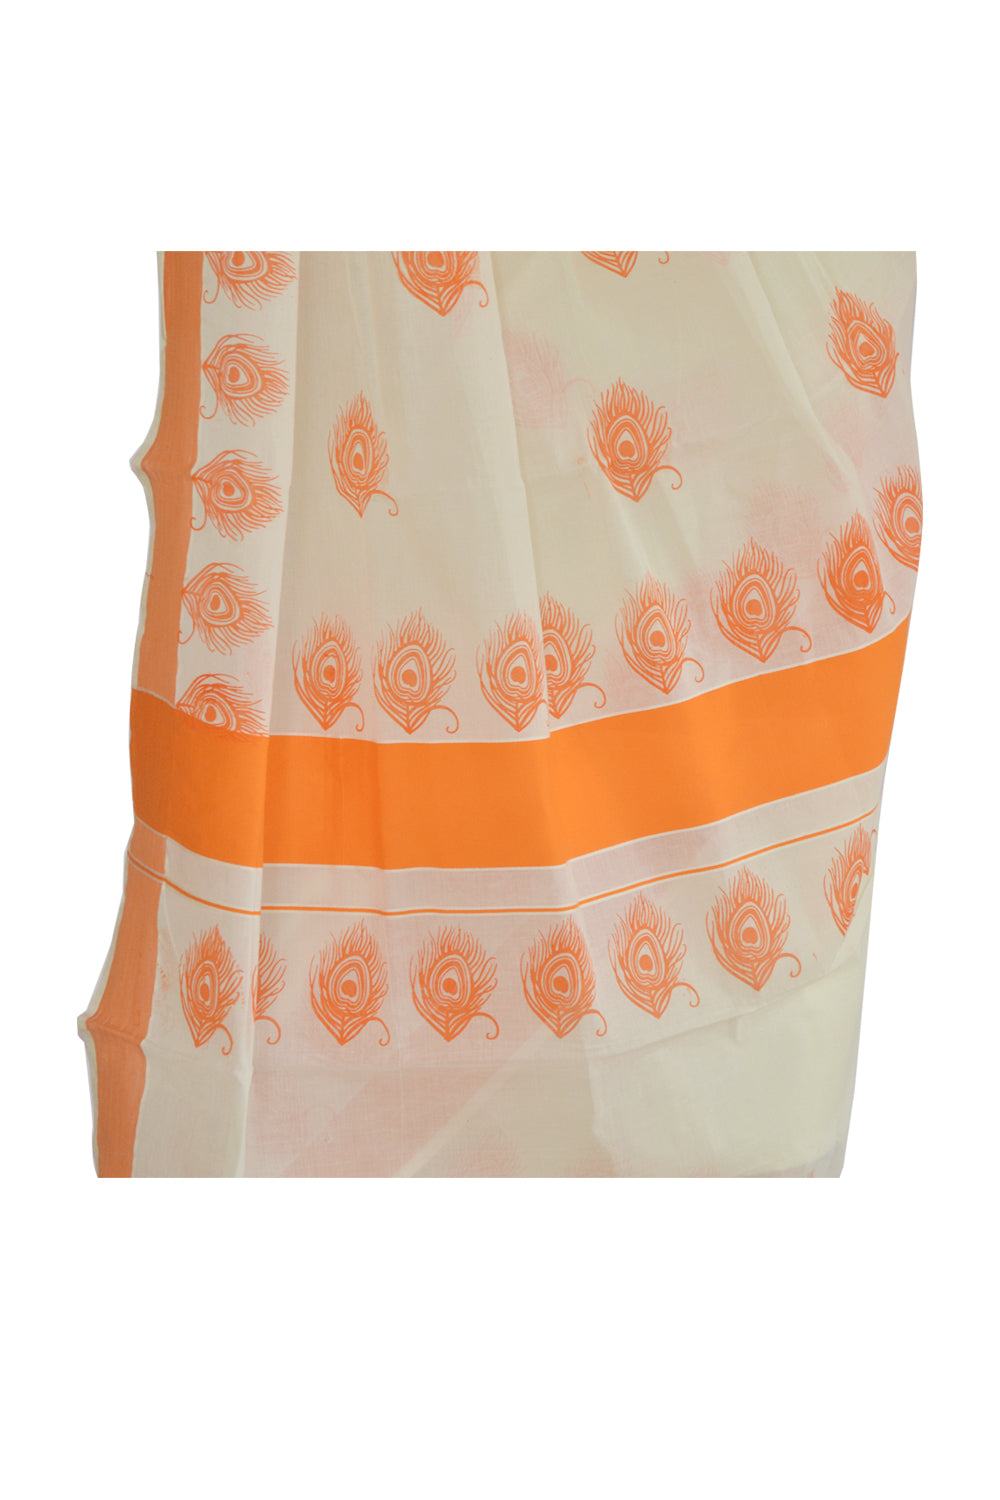 Kerala Saree with Orange Peacock Feather Block Print